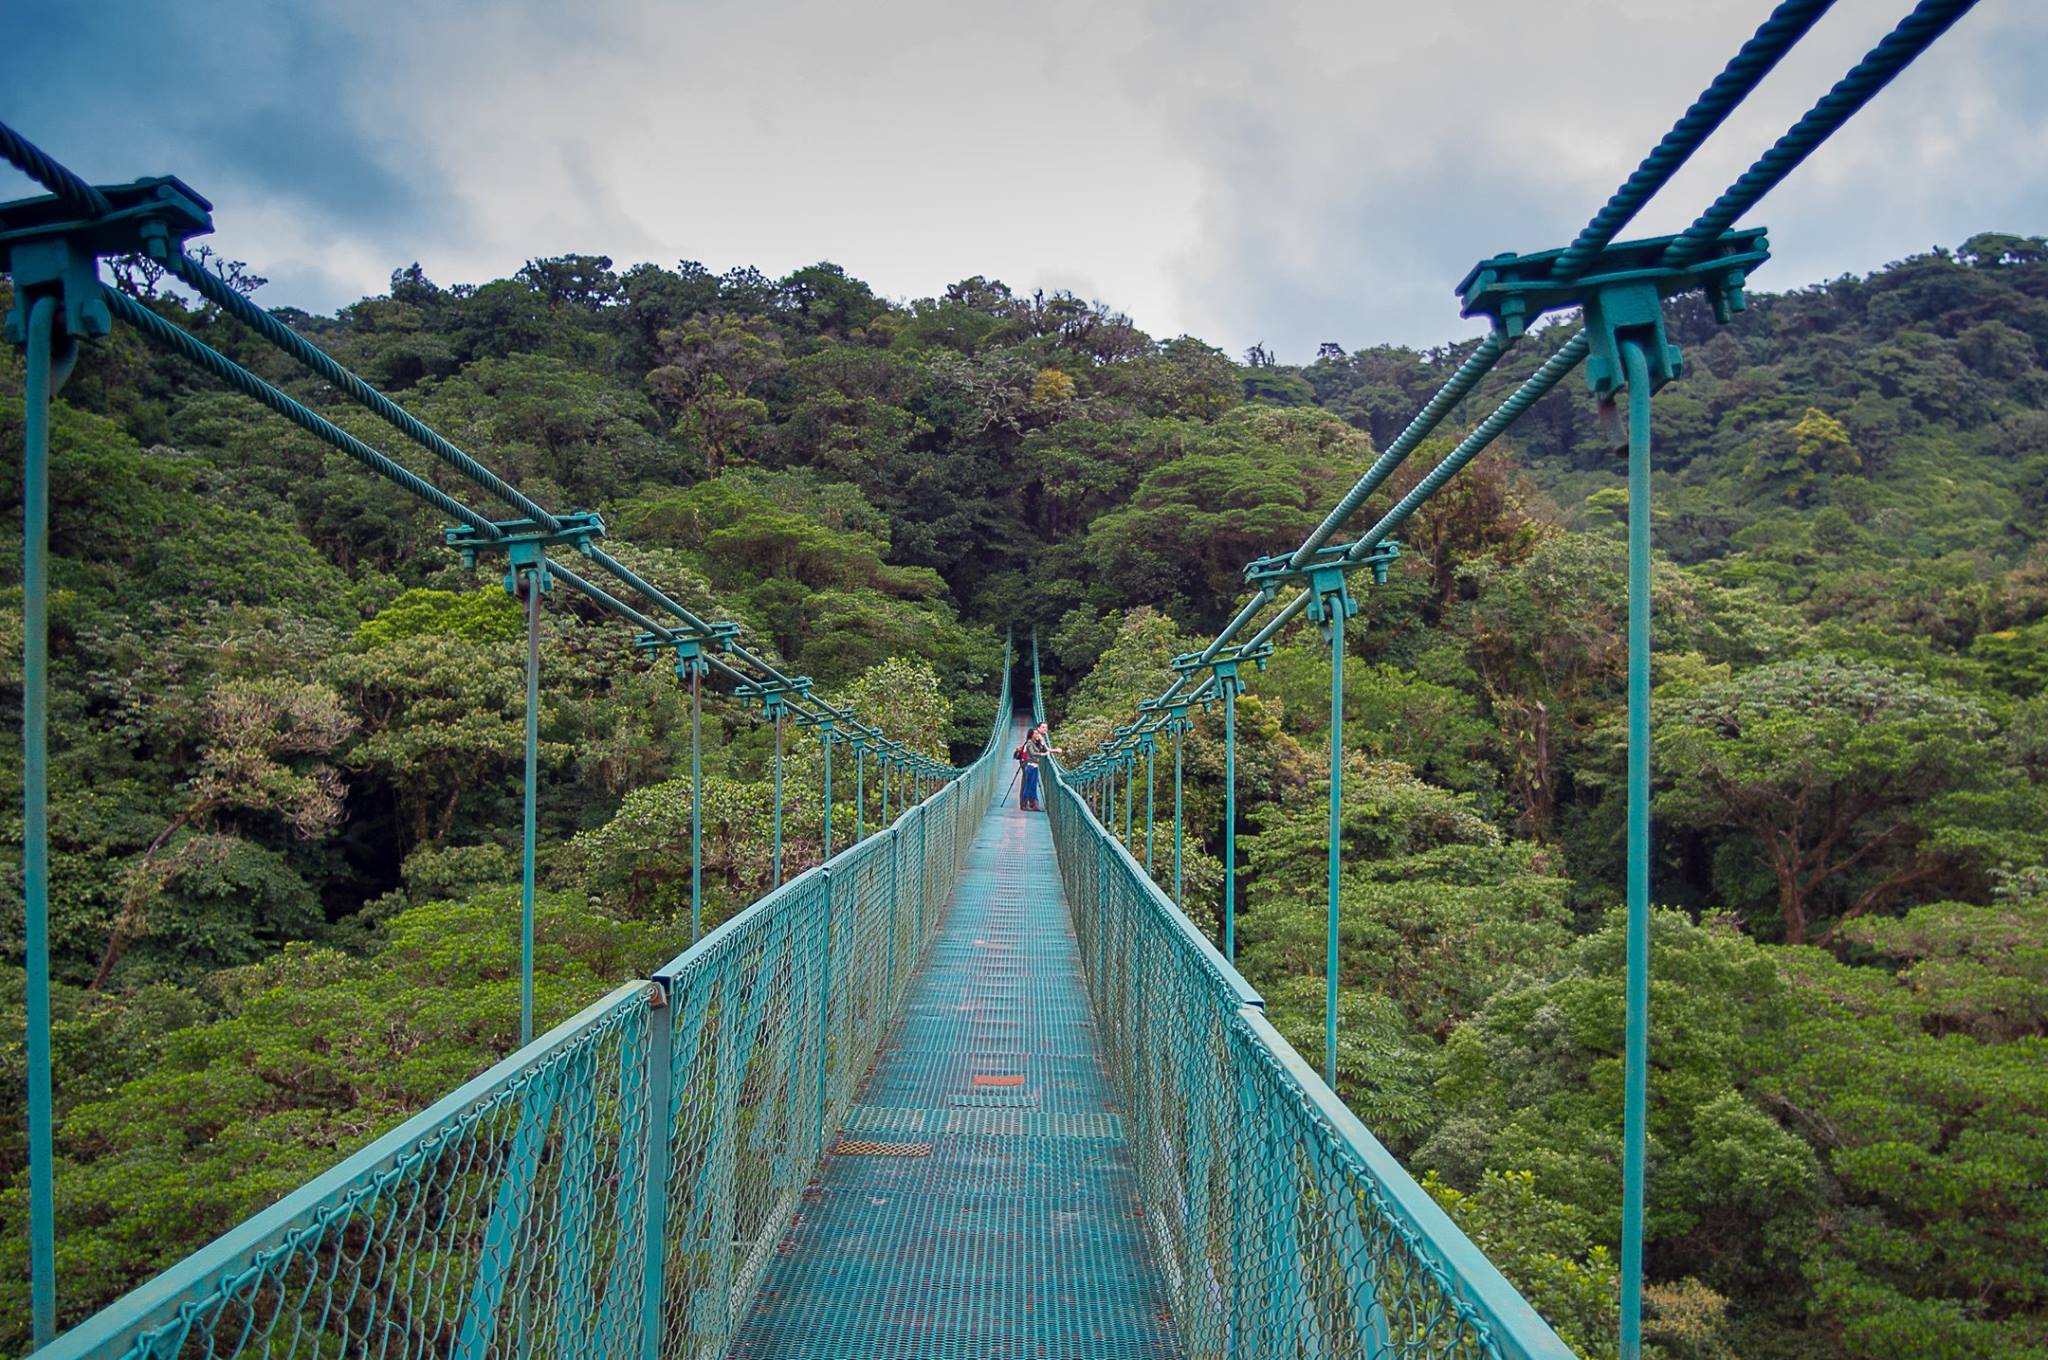 Full Day Trip to Selvatura Park - Guanacaste Viajes